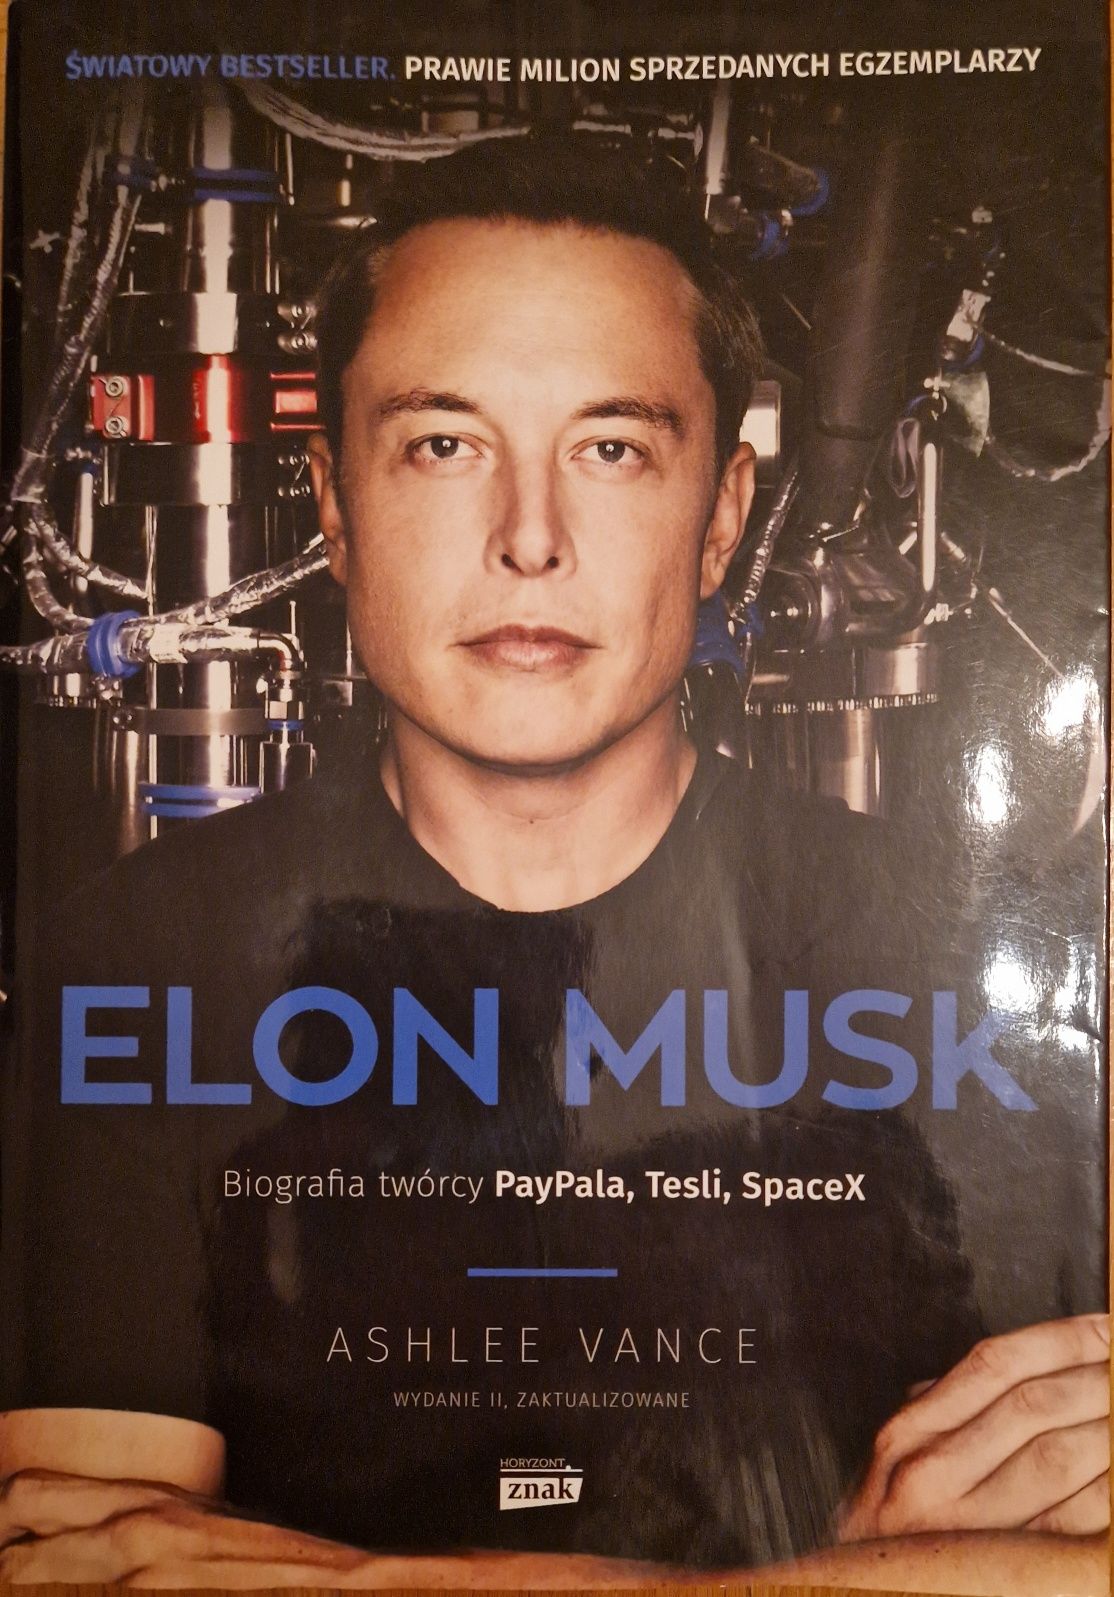 Elon Musk, biografia. Ashlee Vance